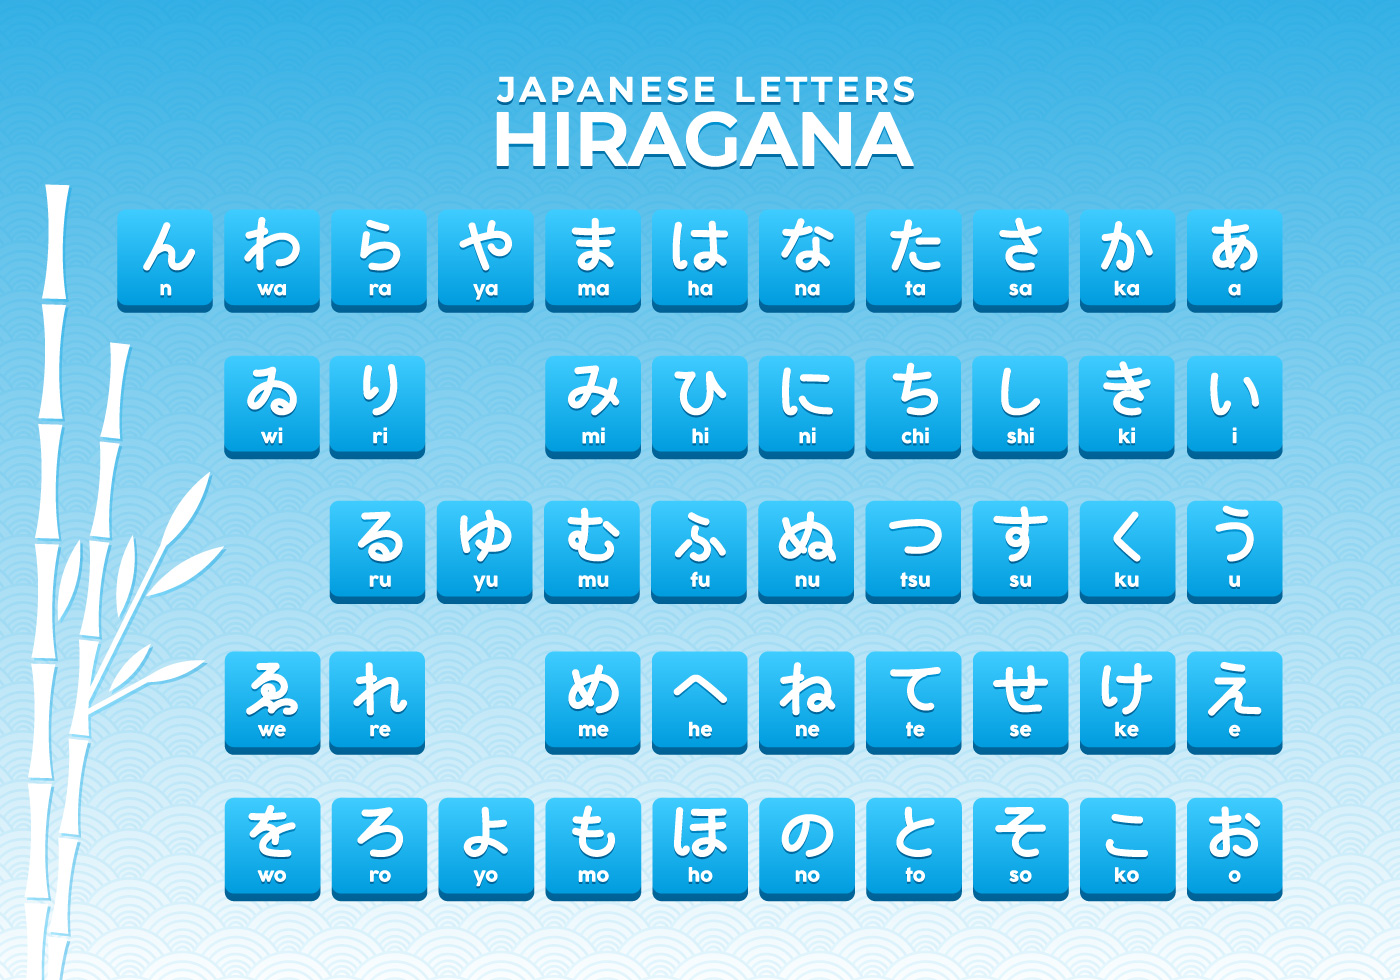 Japanese Letters Hiragana Alphabet - Download Free Vectors, Clipart ...